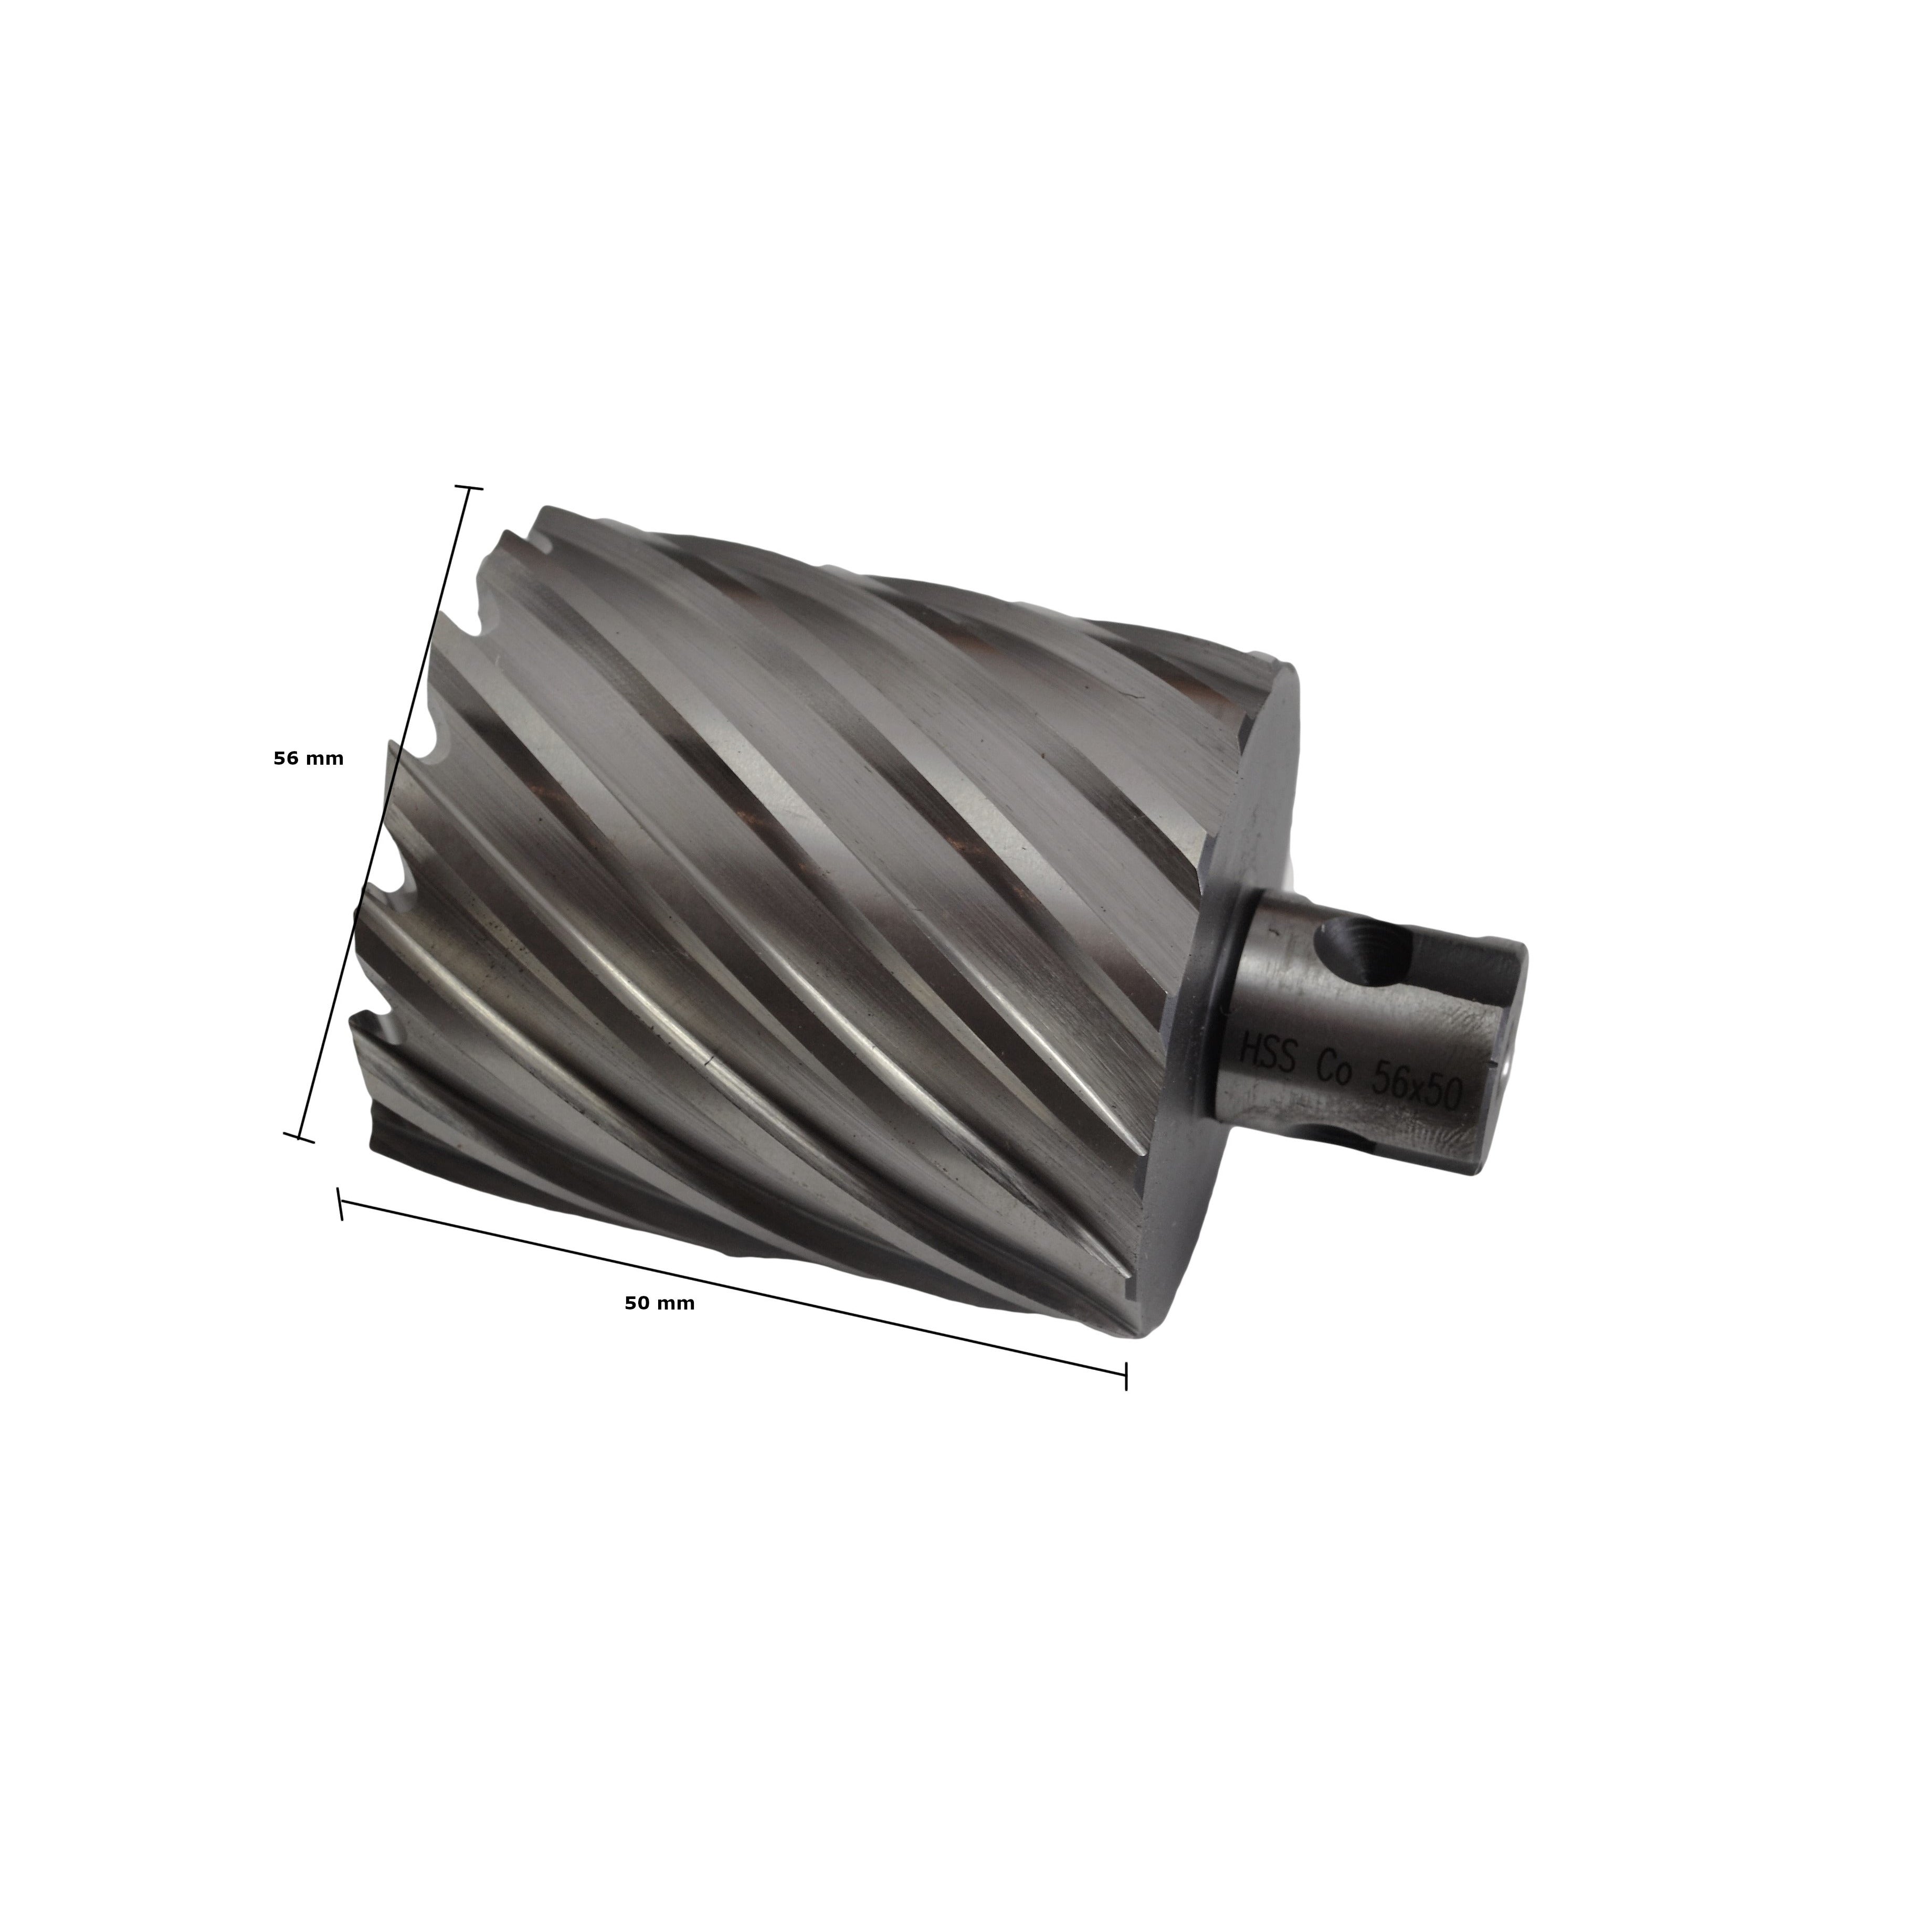 annular cutter cut brach 56x50mm universal shank rotabroach slugger CNC industrial metalwork supplies